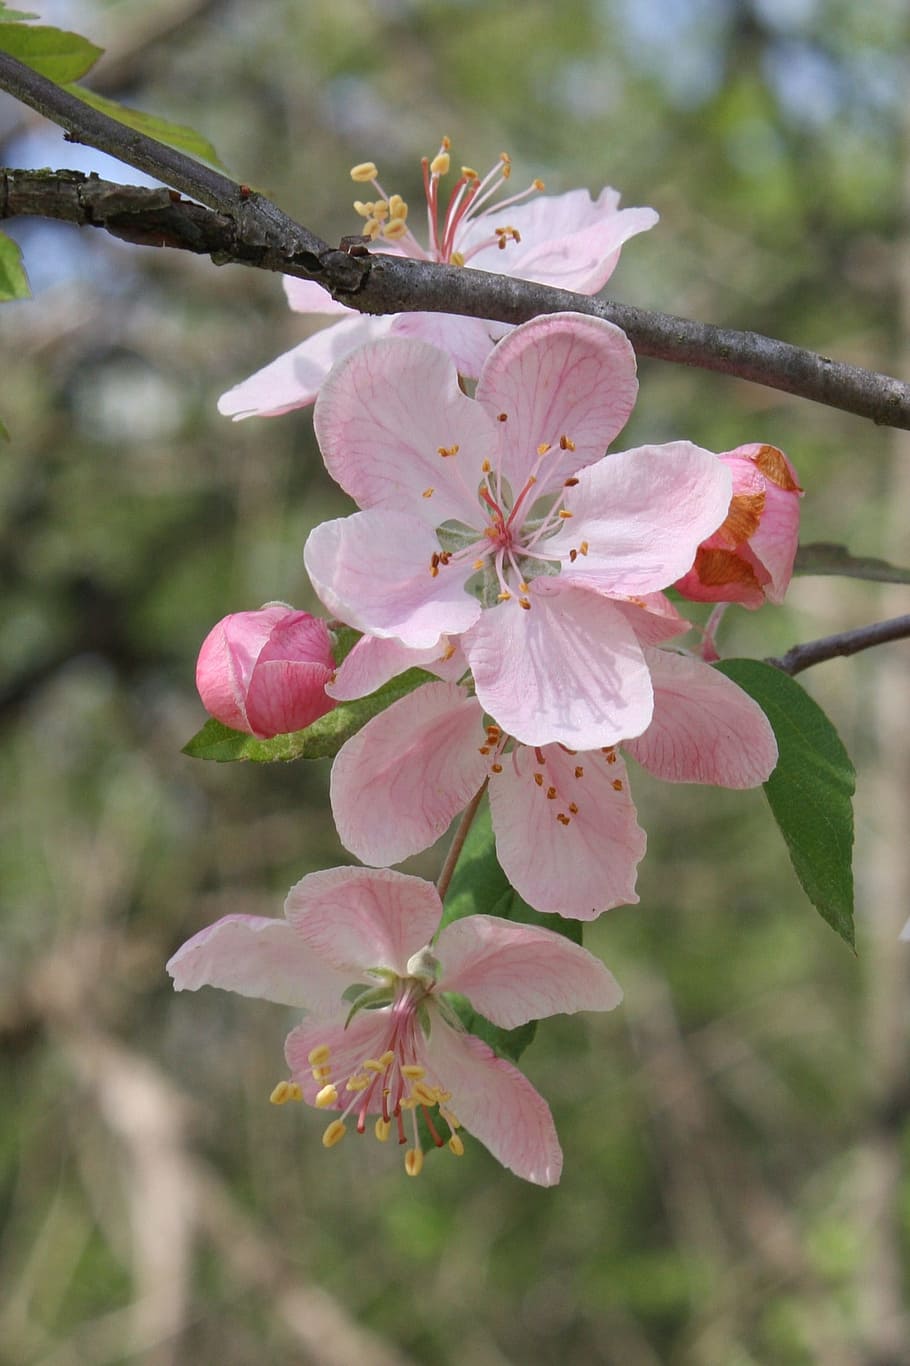 merah muda, apel, mekar, buah, pohon, alam, musim semi, flora, tanaman, musim panas